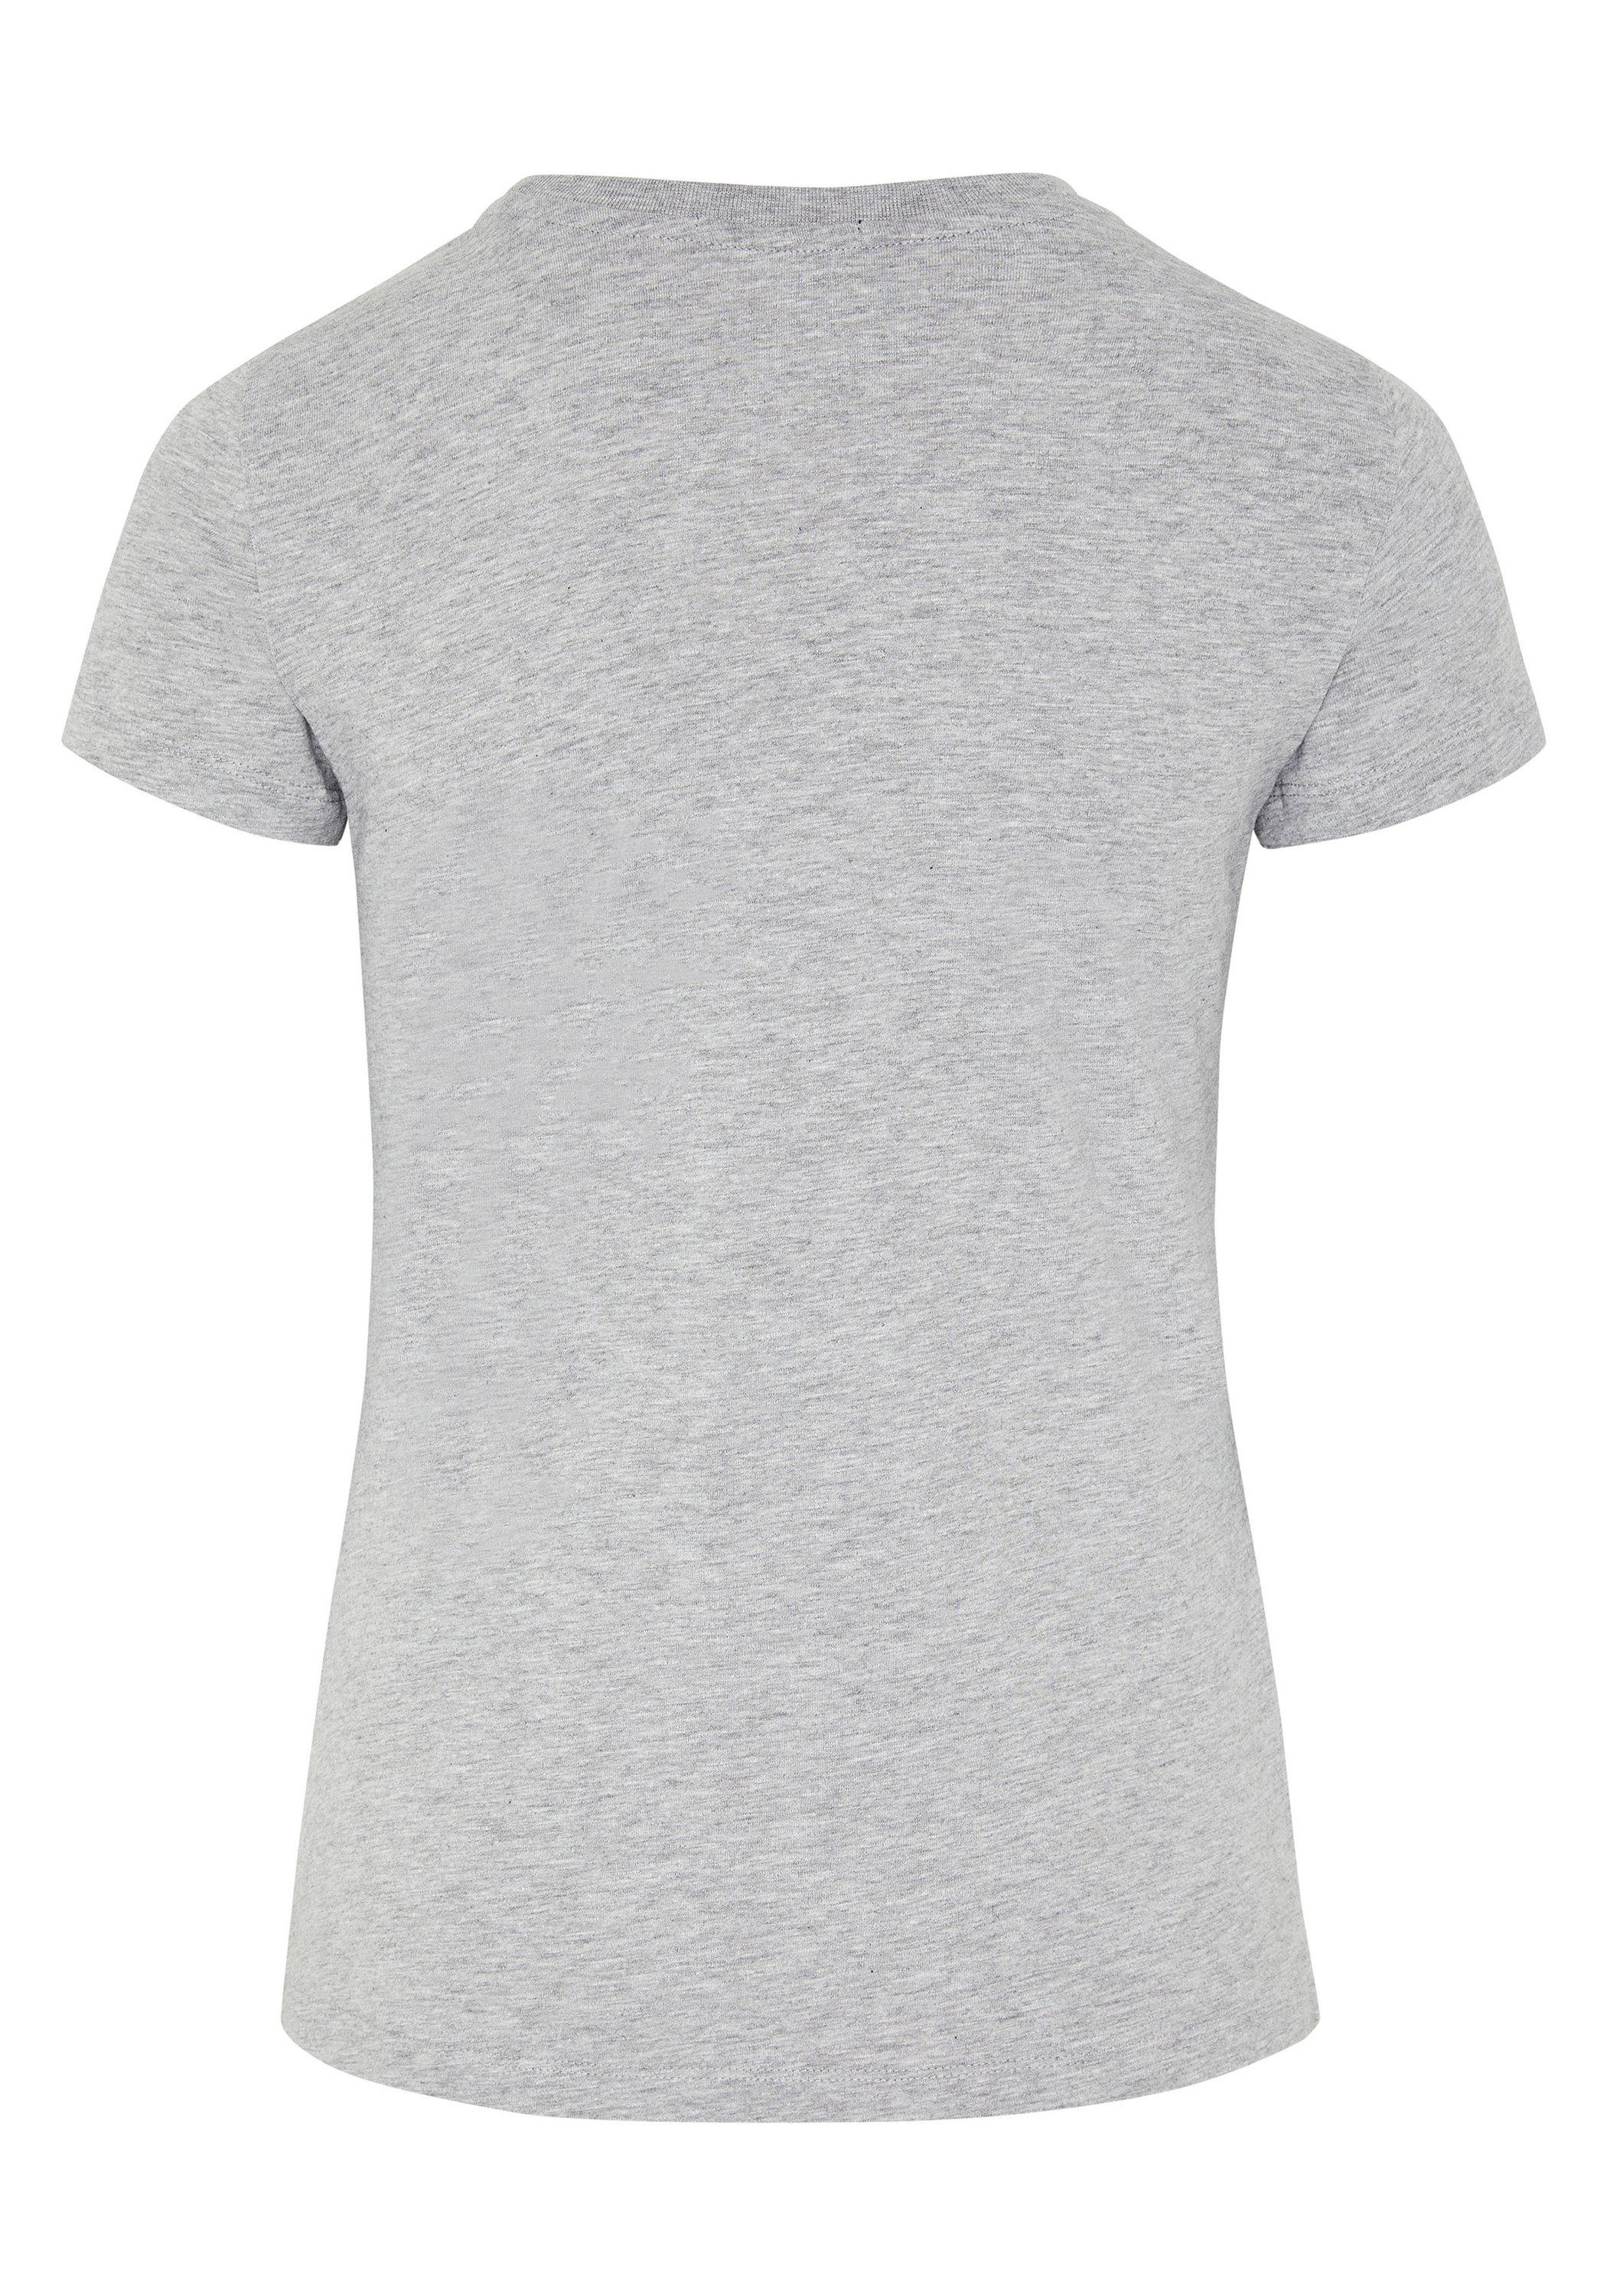 Chiemsee Neutr, Print-Shirt Gray T-Shirt mit 1 Jumper-Frontprint